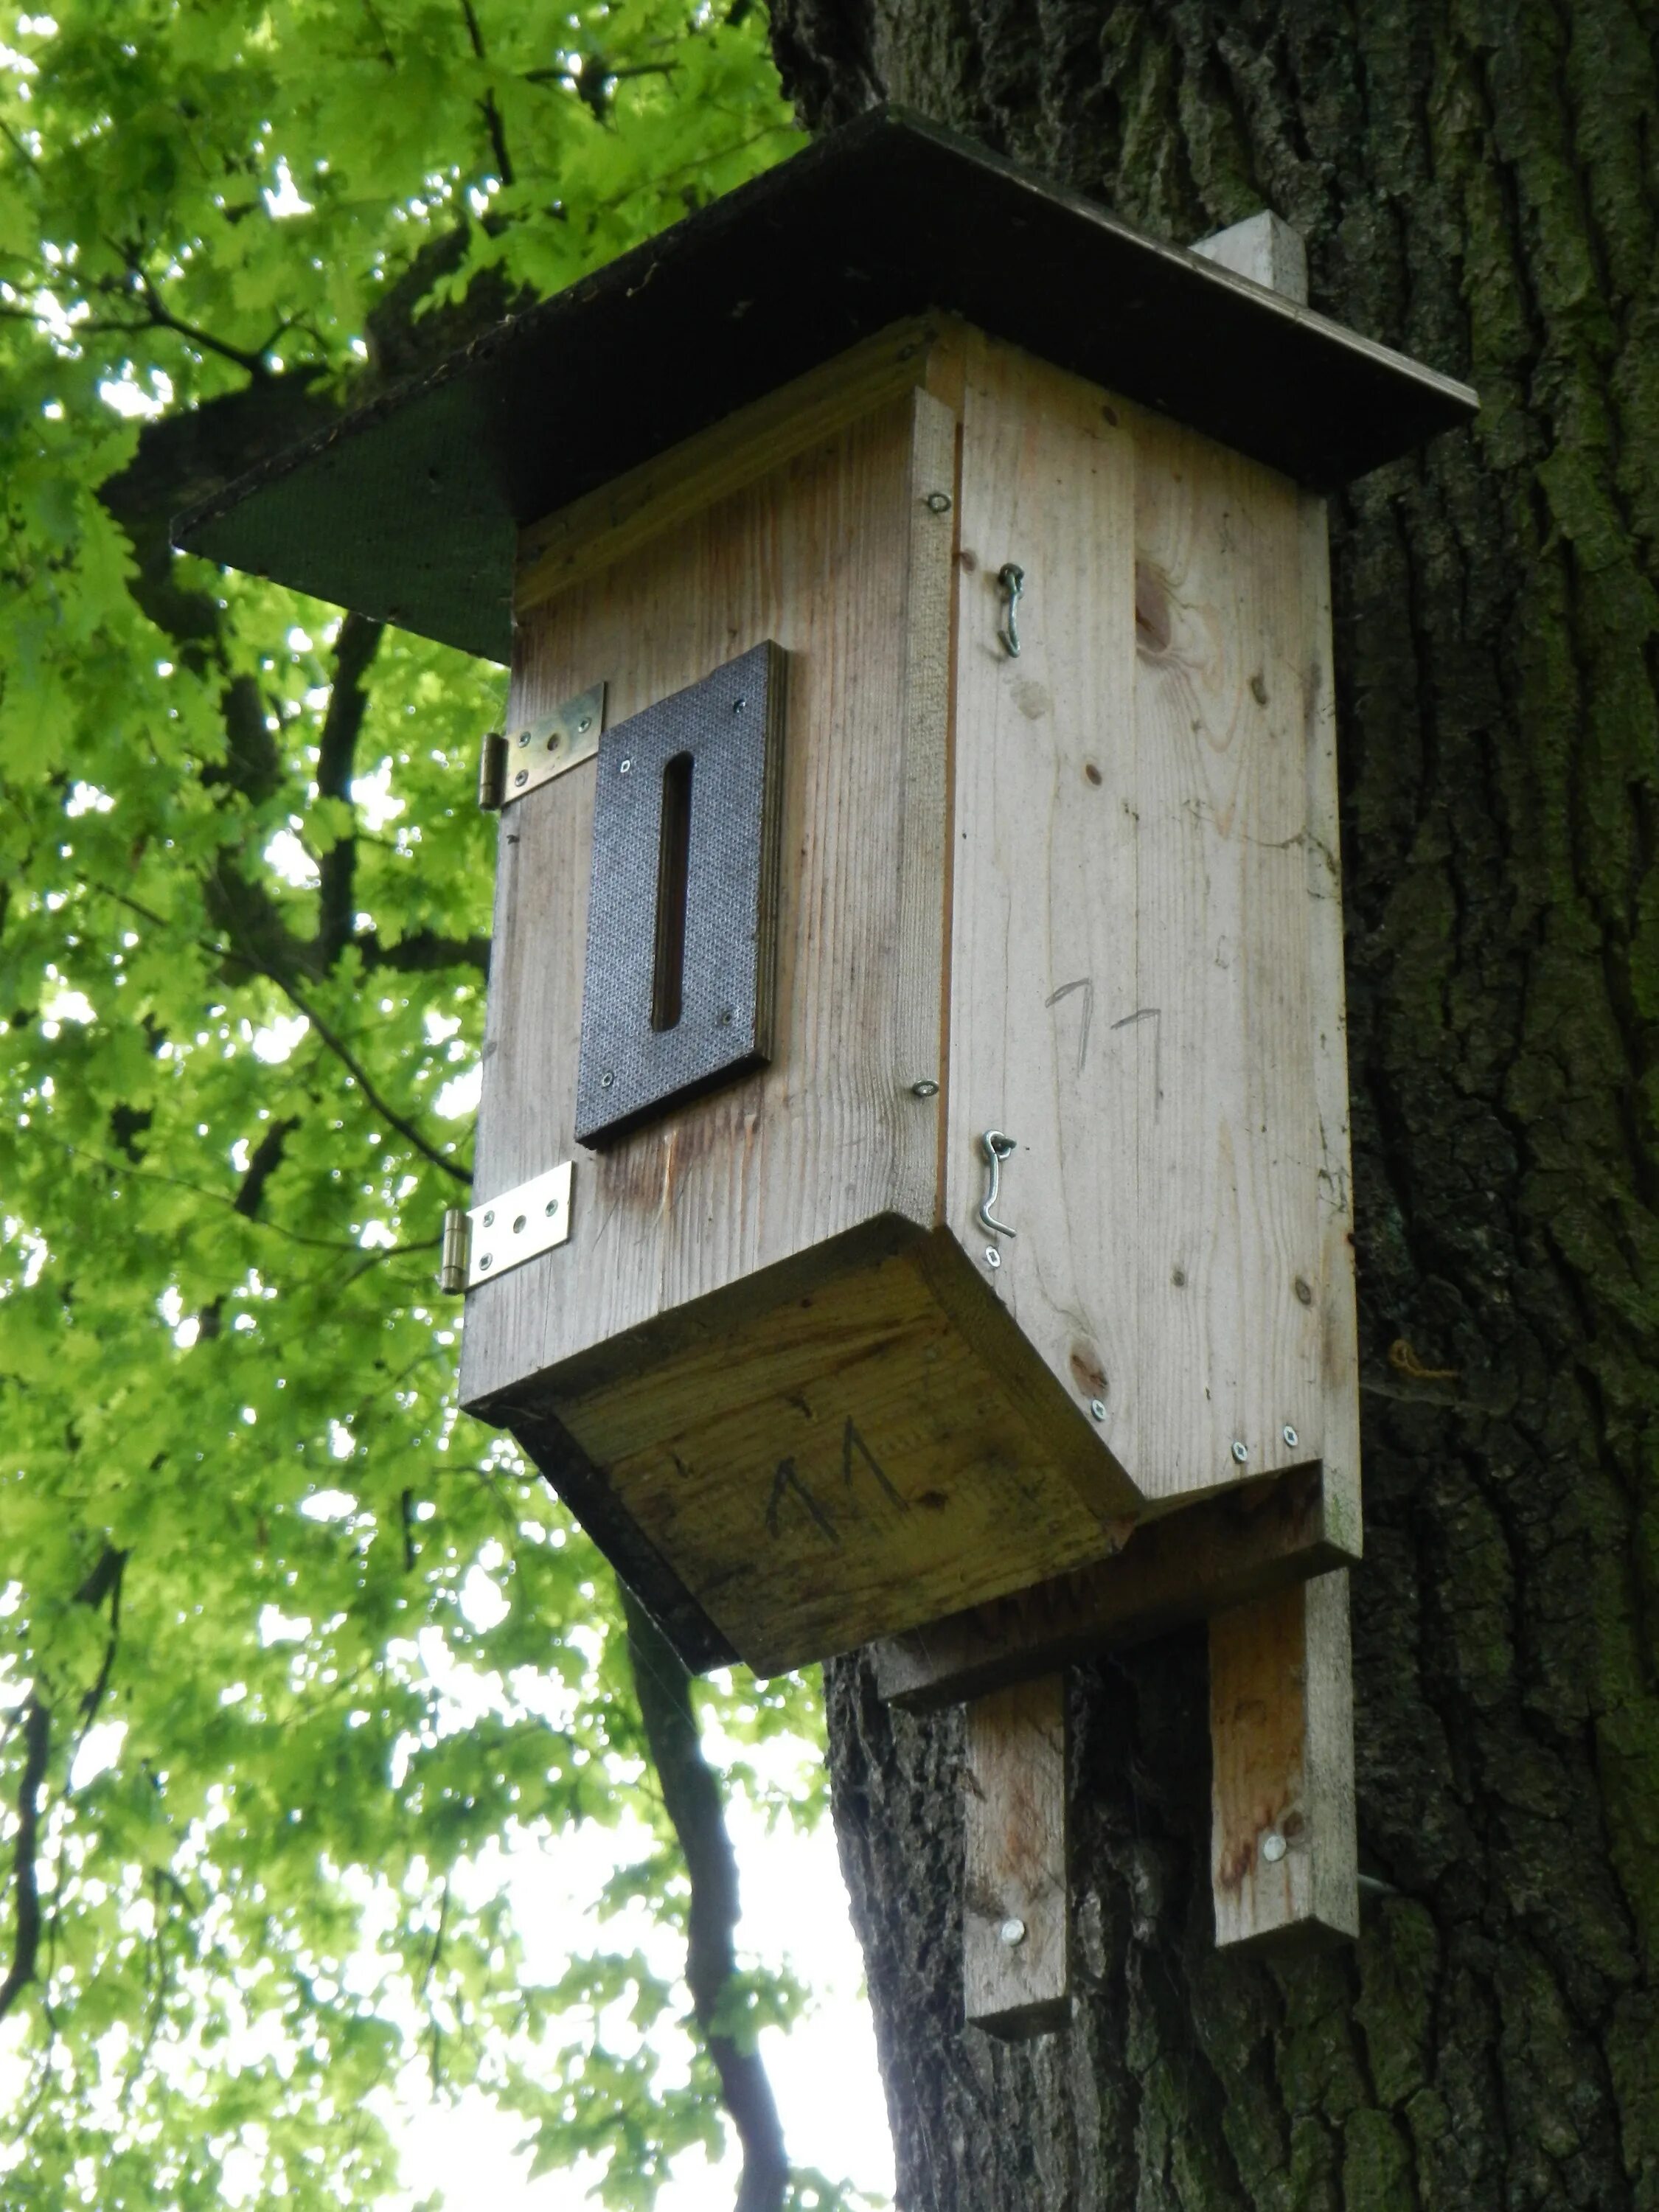 Скворечник "птичий домик". Скворечник на дереве. Многоэтажный скворечник. Скворечник на яблоне. Nesting box